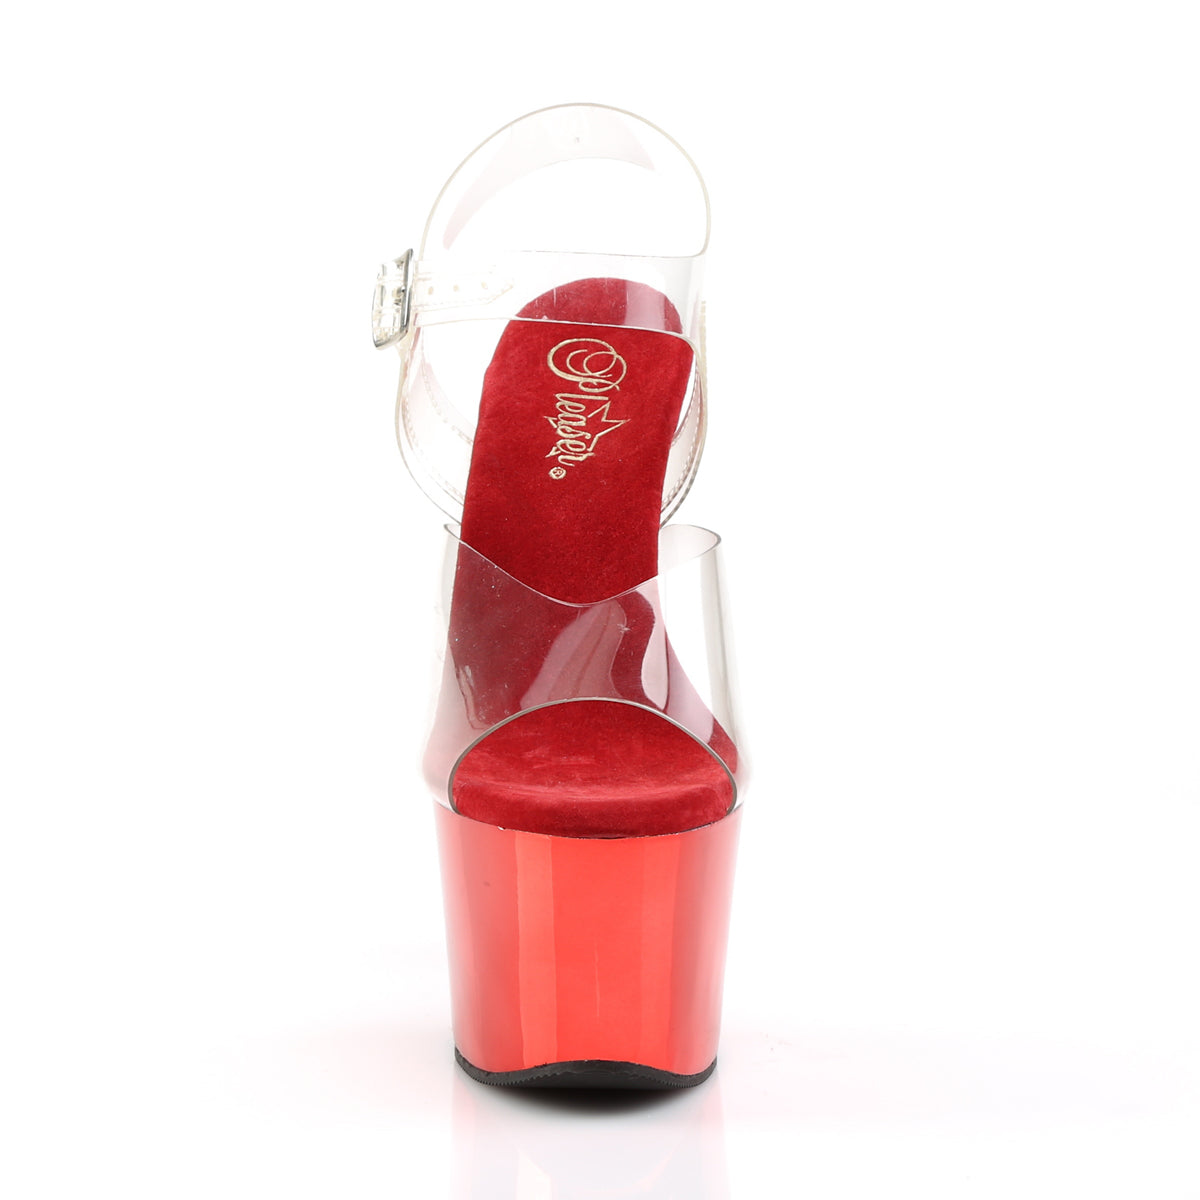 SKY-308 Red & Clear Ankle Peep Toe High Heel